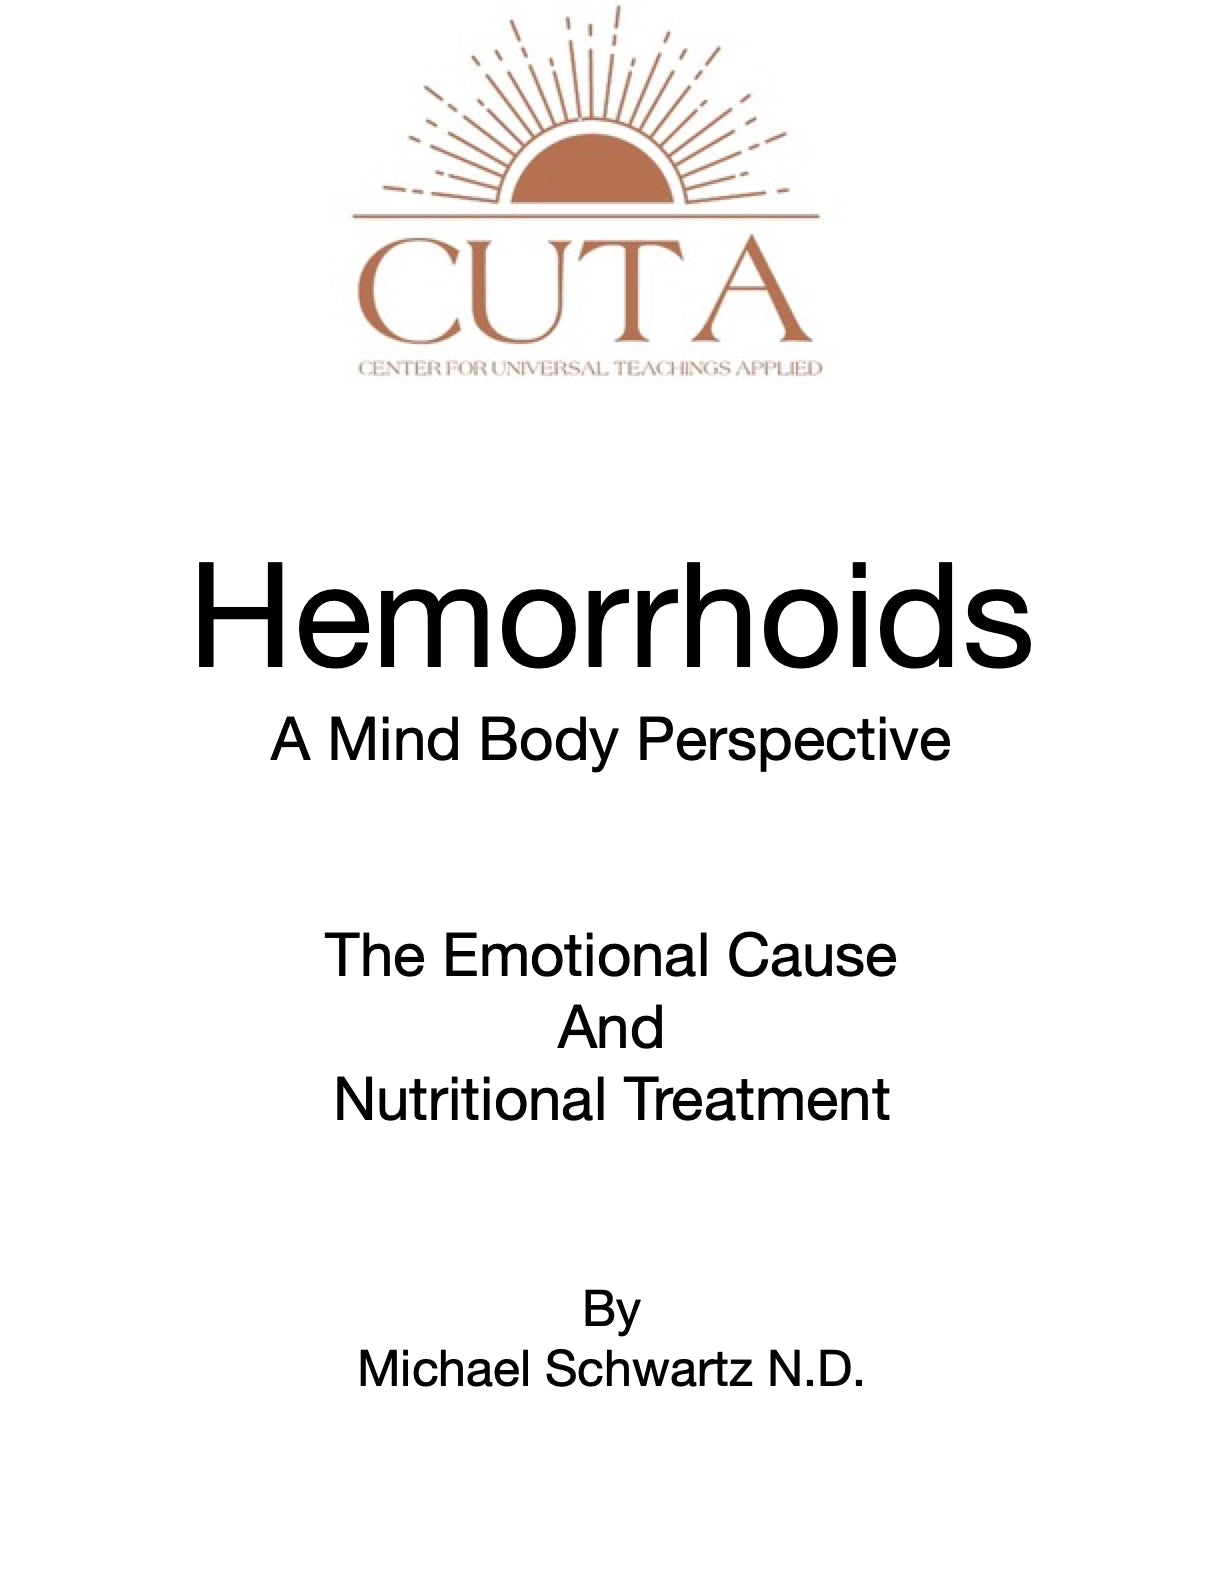 Hemorrhoids Booklet